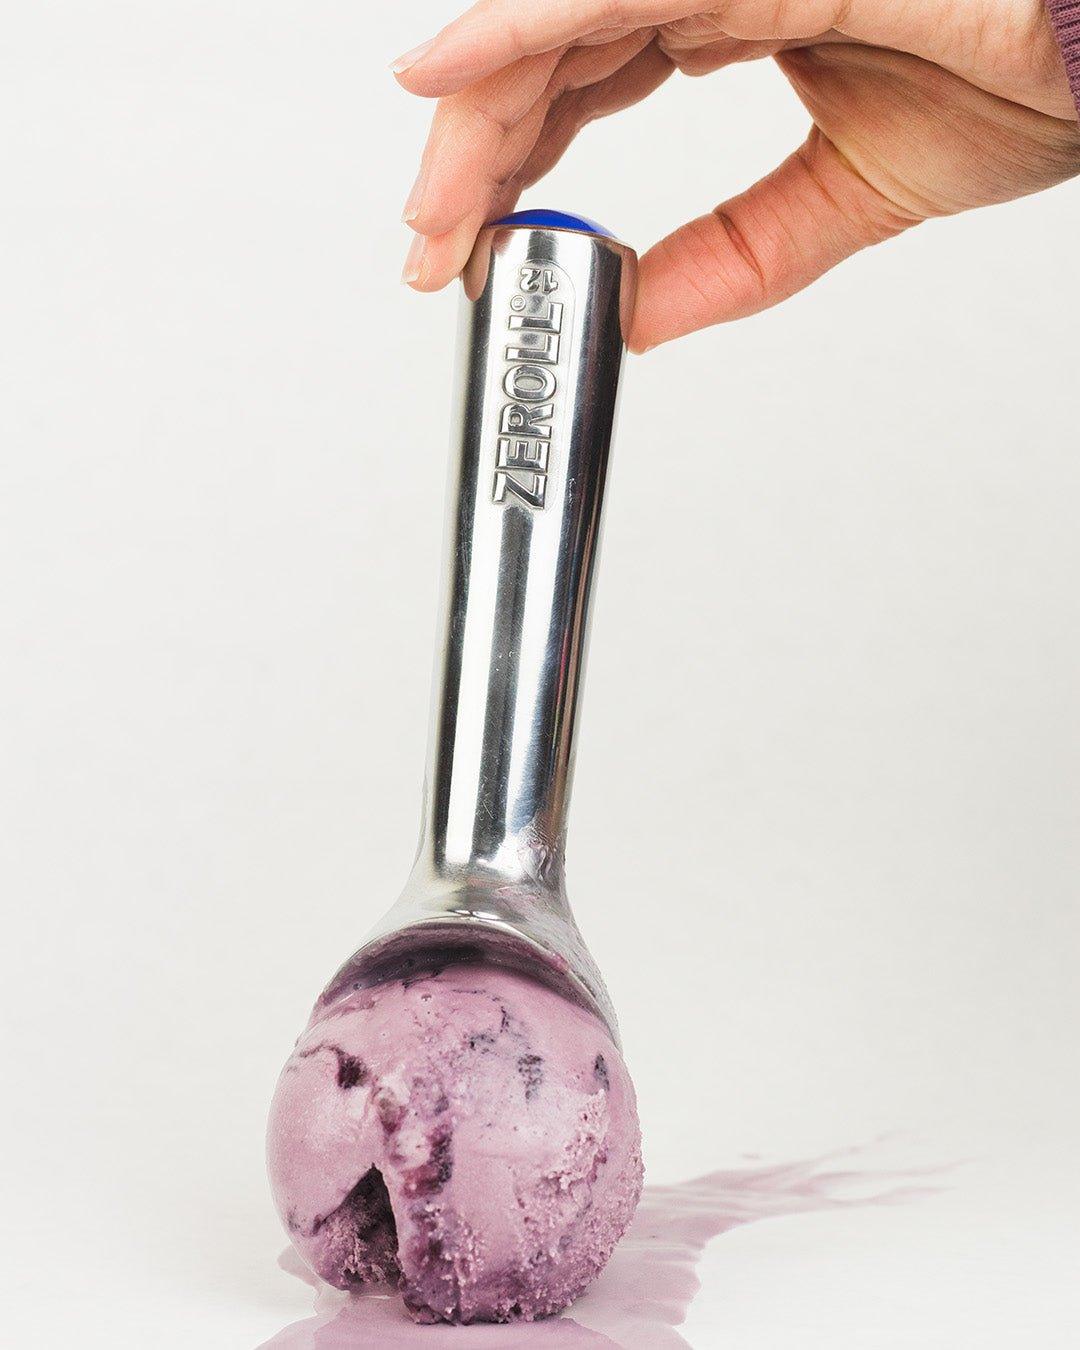 Zeroll Original 3 oz Ice Cream Scoop, Size 12, in Hardcoat Anodized  Aluminum with Blue End Cap (1012-ZT)